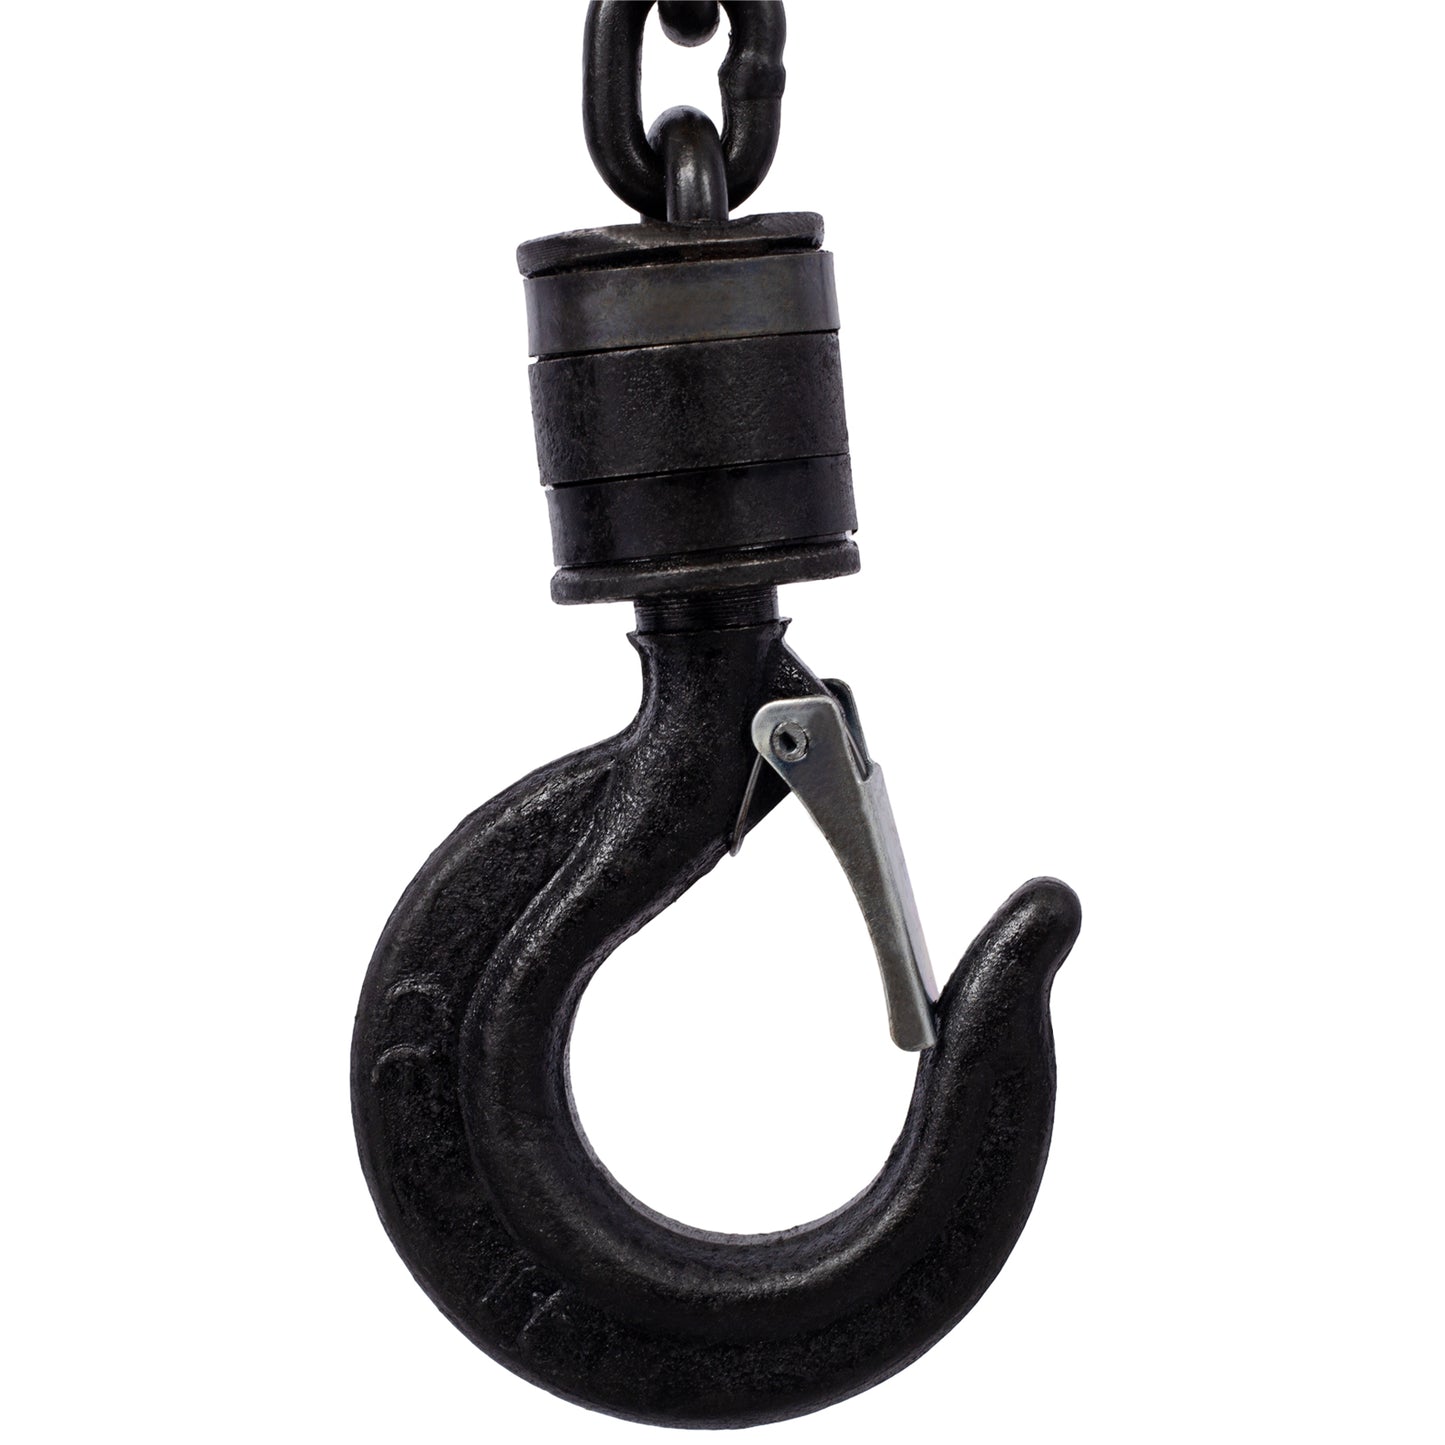 Chain hoist 2200lbs 1T capacity 10ft wIth 2 heavy duty hooks,Manual chain hoist steel construction,black